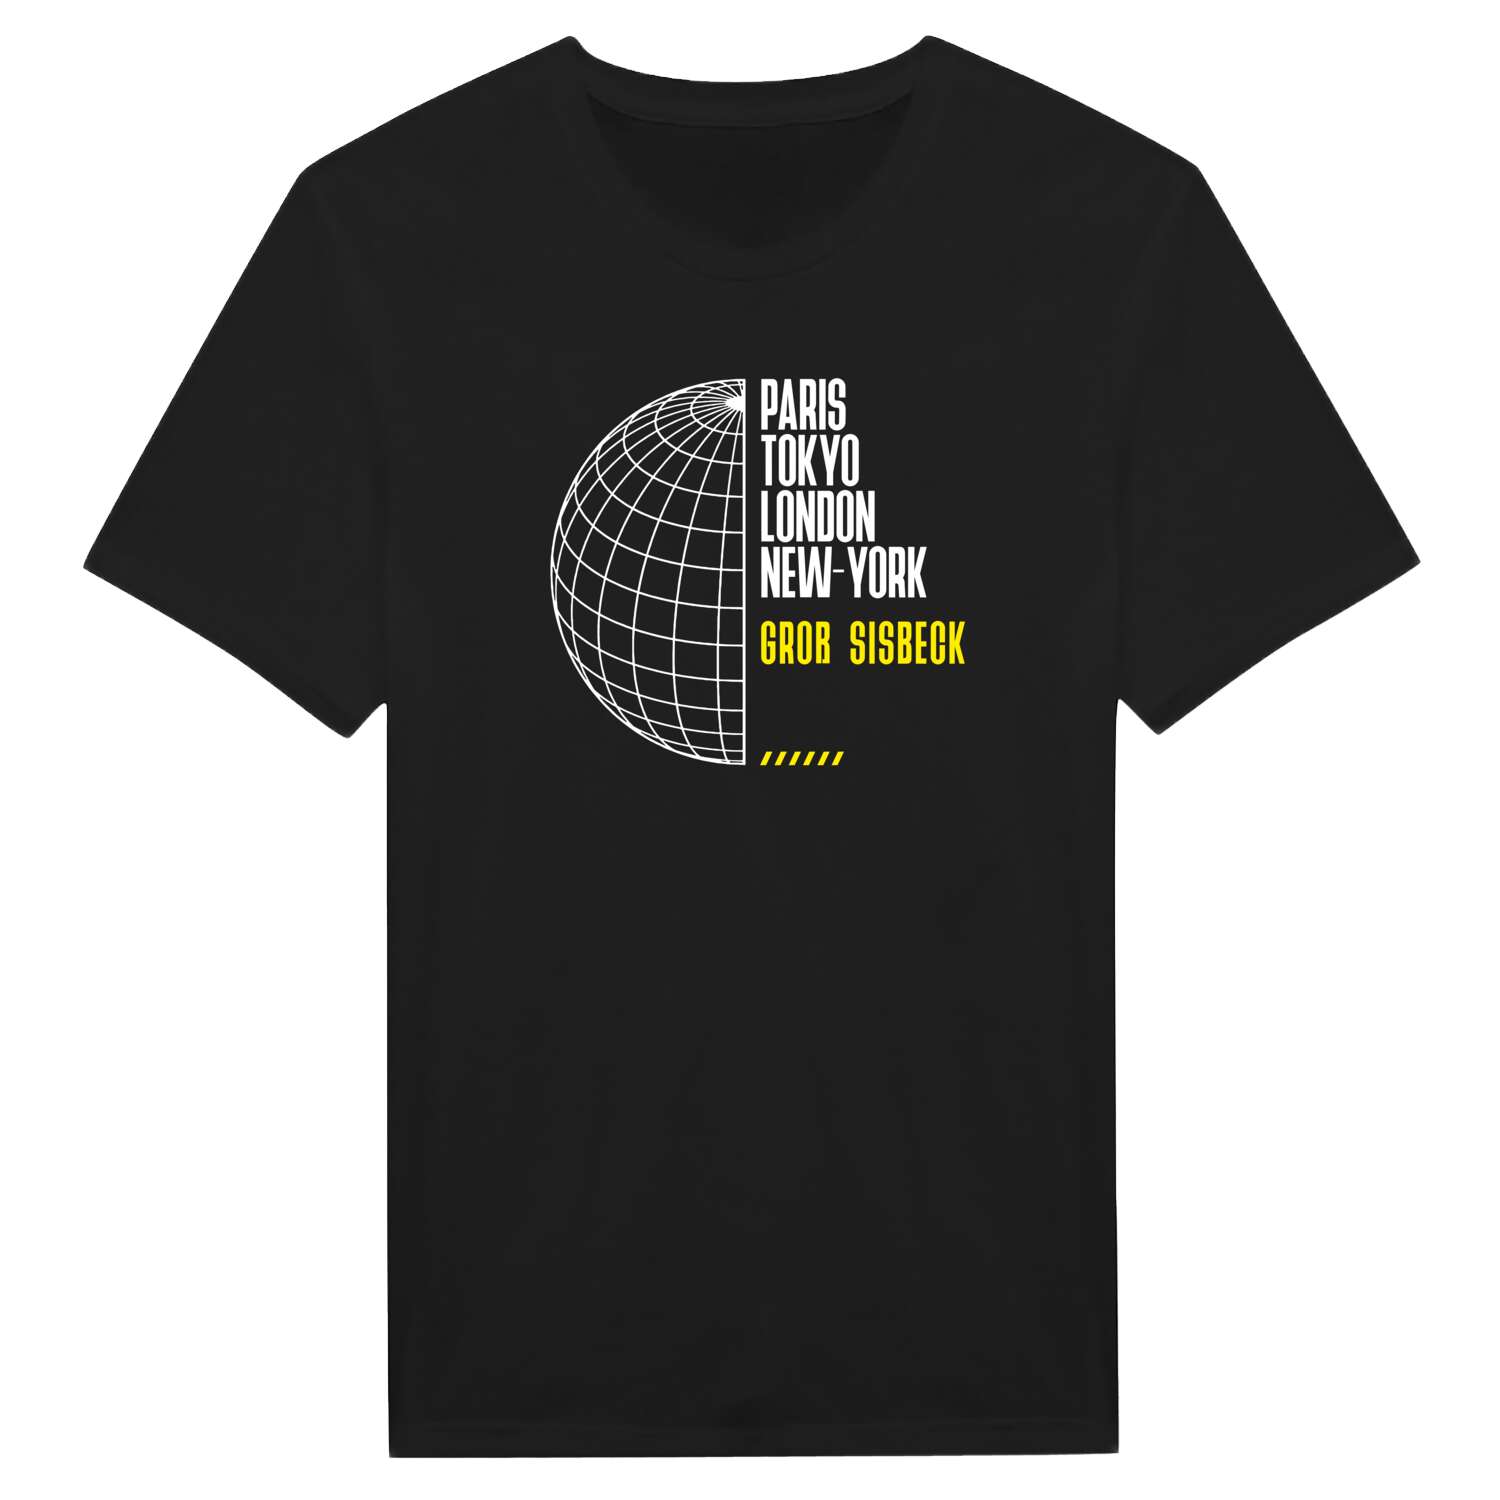 Groß Sisbeck T-Shirt »Paris Tokyo London«